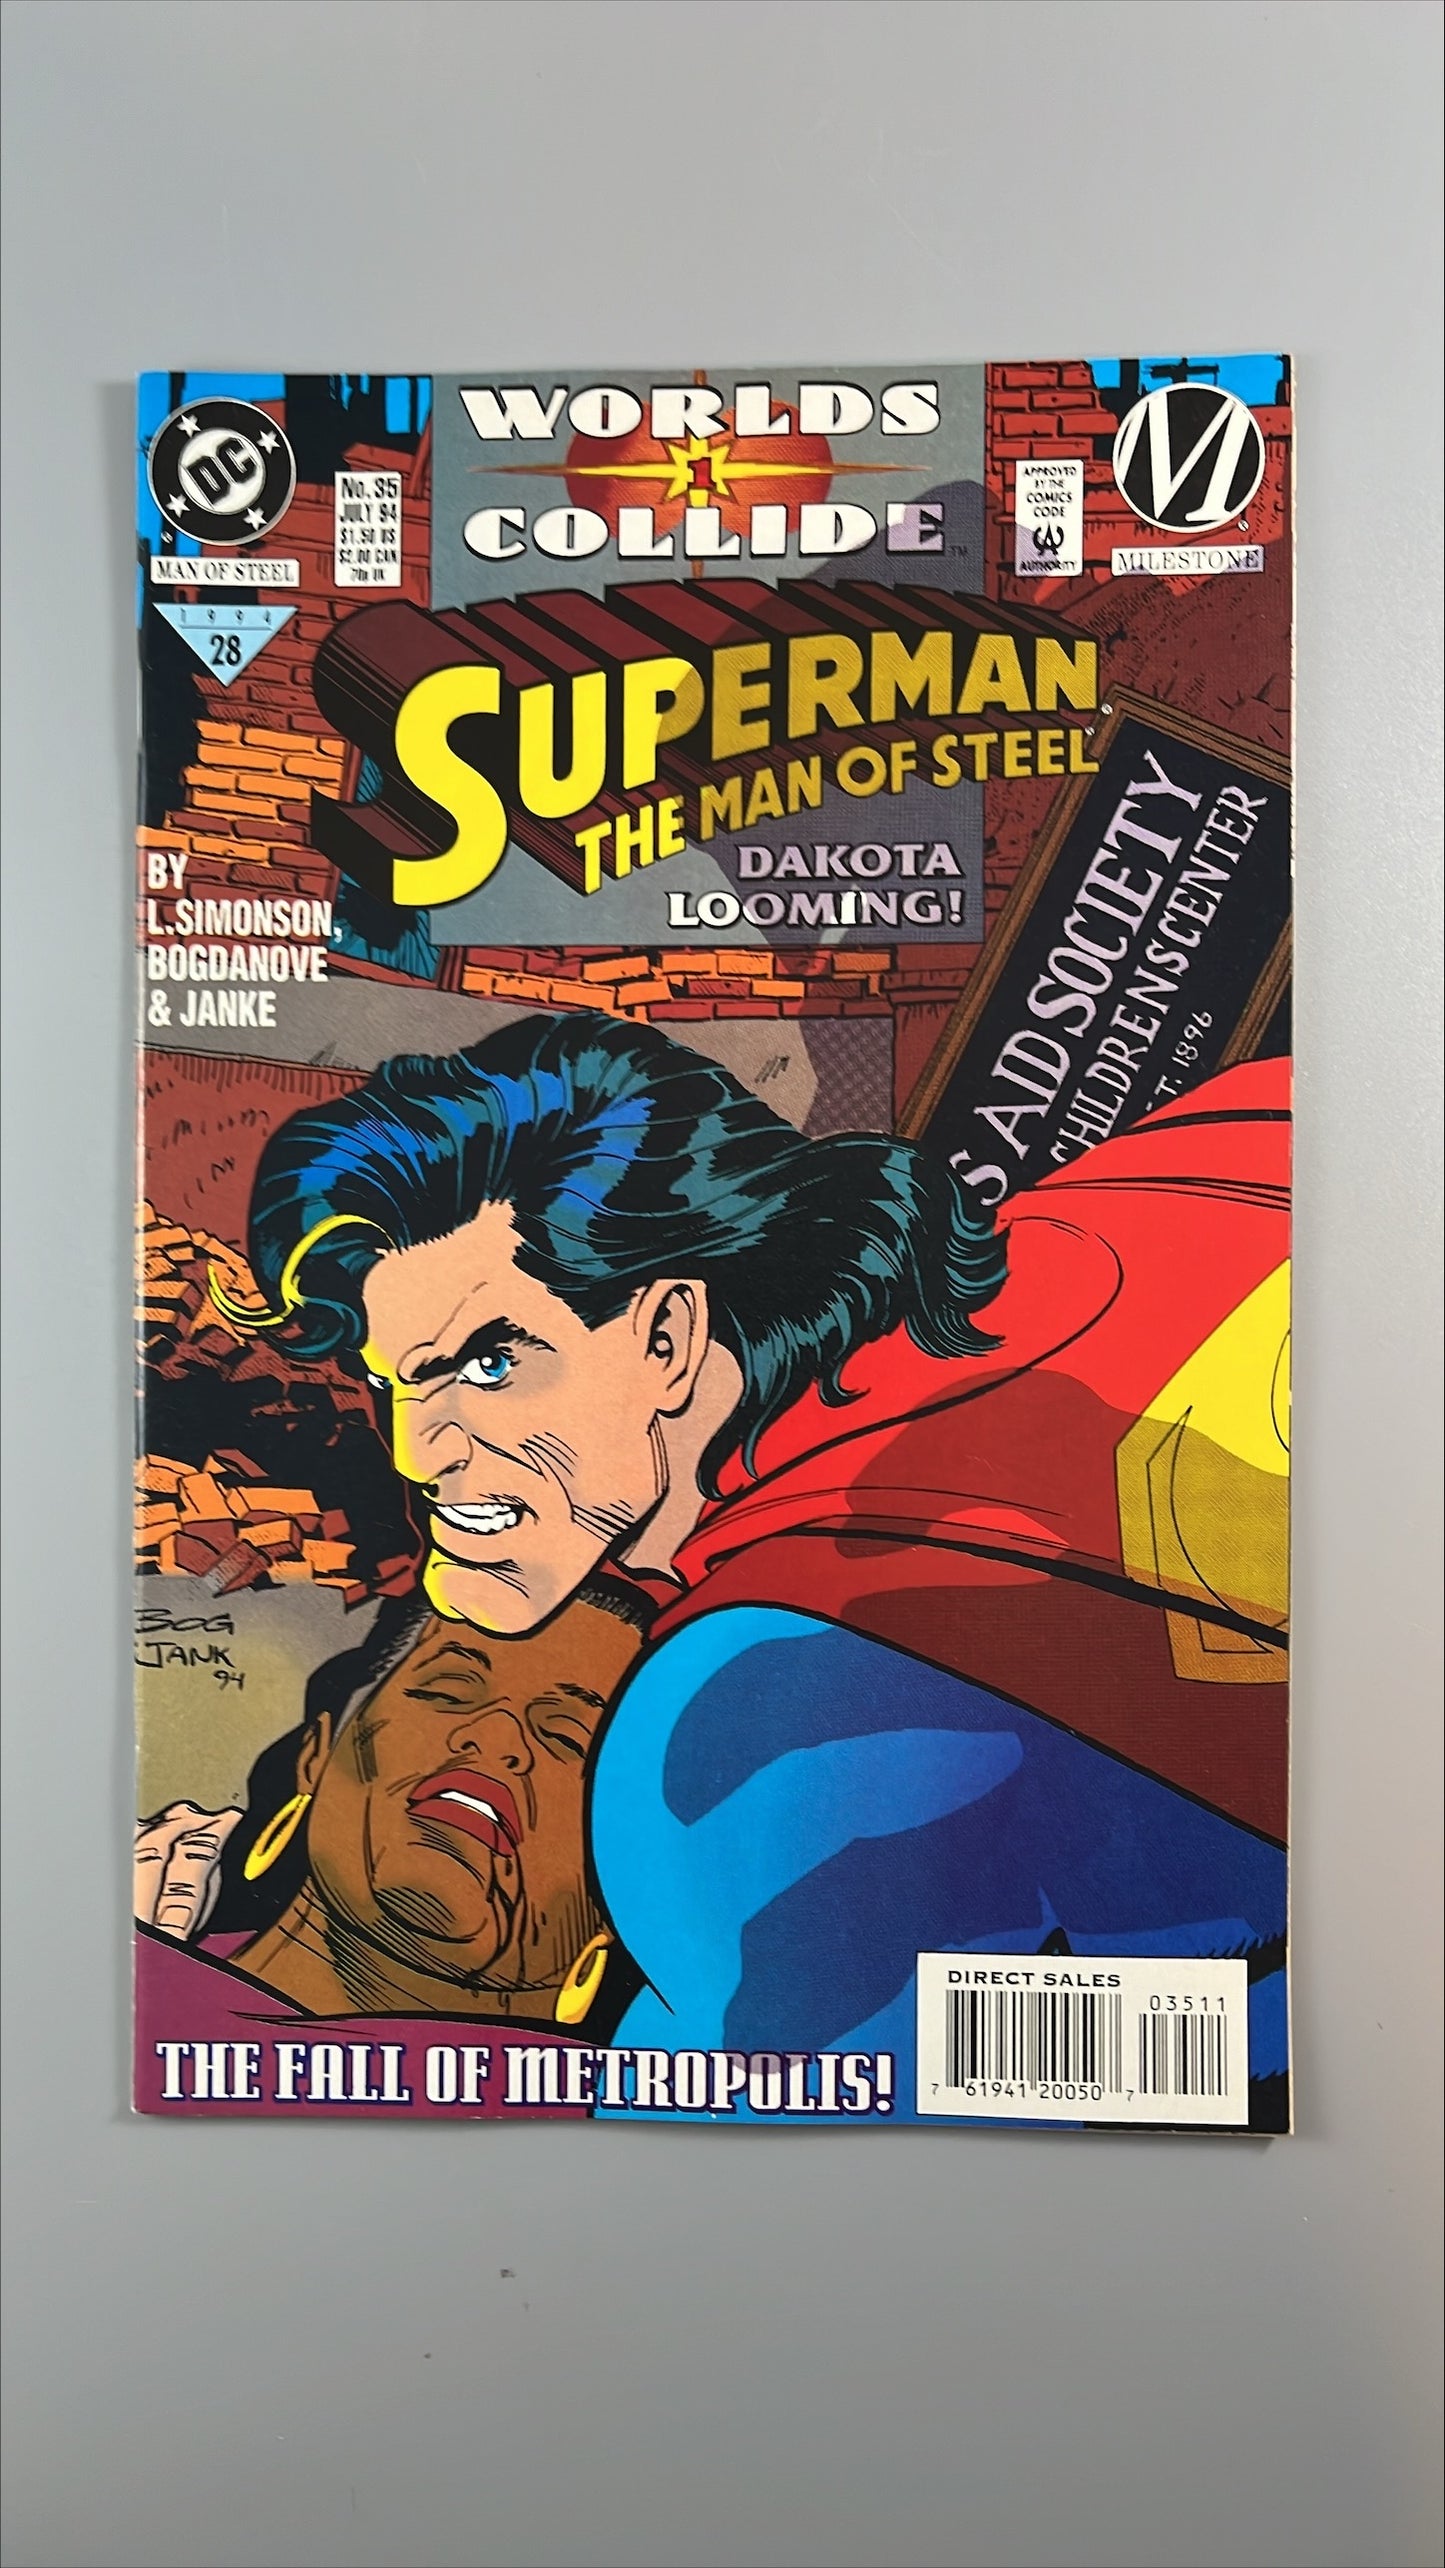 Superman: The Man of Steel #35